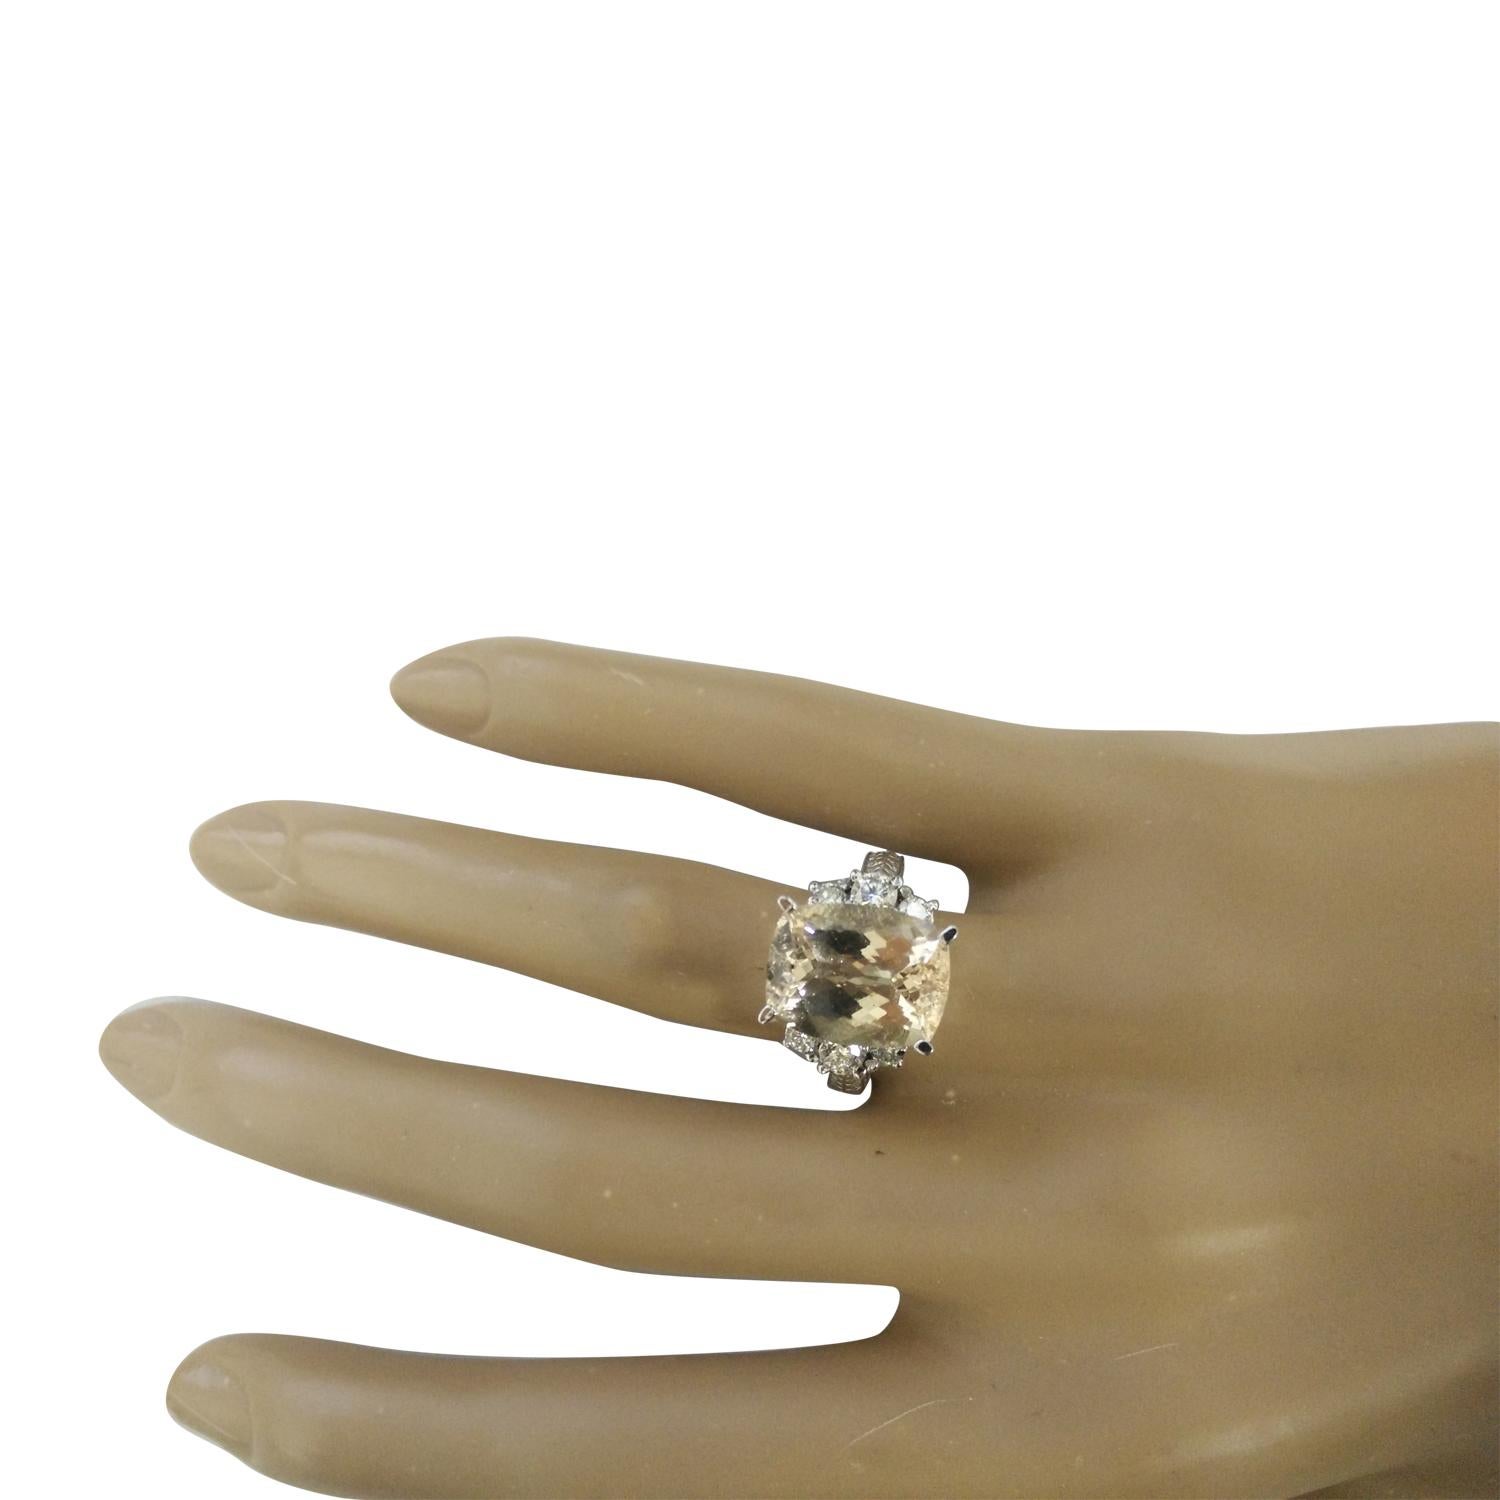 6.69 Carat Natural Morganite 14 Karat Solid White Gold Diamond Ring
Stamped: 14K 
Total Ring Weight: 7.5 Grams 
Morganite Weight: 6.09 Carat (12.00x10.00 Millimeters)  
Diamond Weight: 0.60 Carat (F-G Color, VS2-SI1 Clarity )
Diamond Quantity: